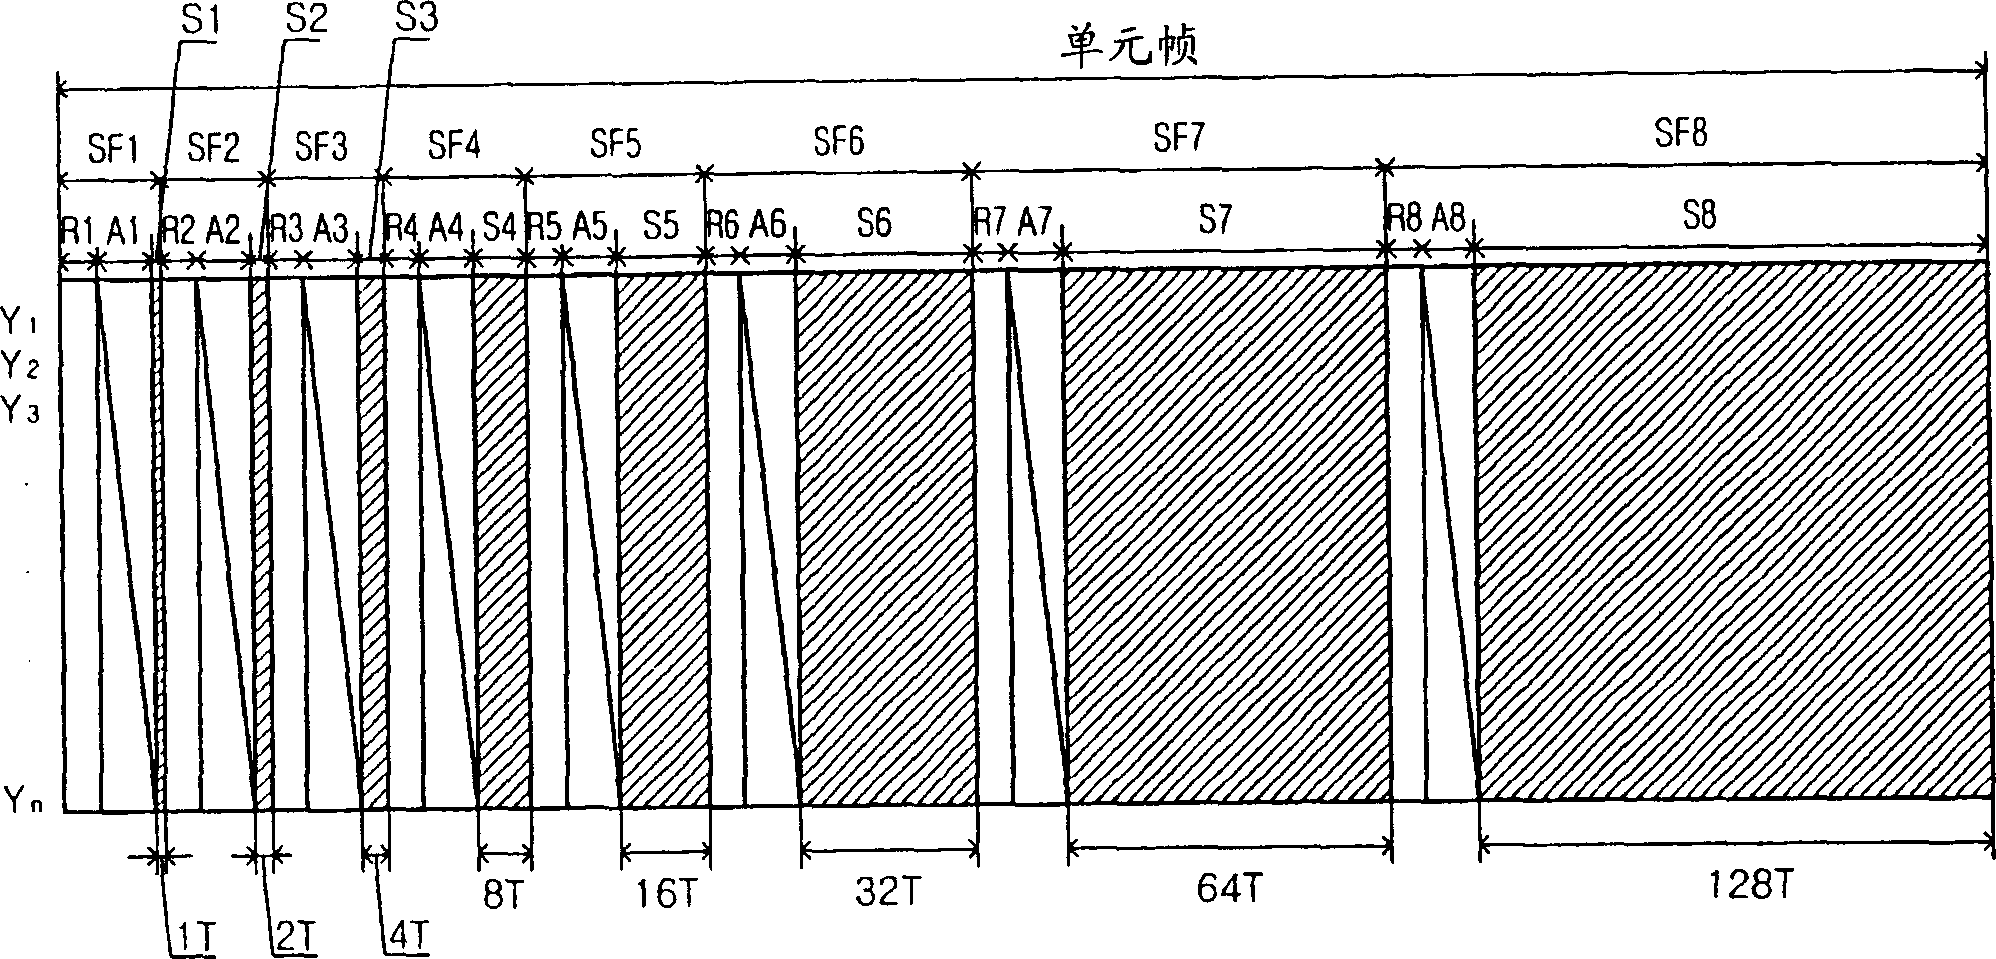 Method of driving plasma display panel (PDP)